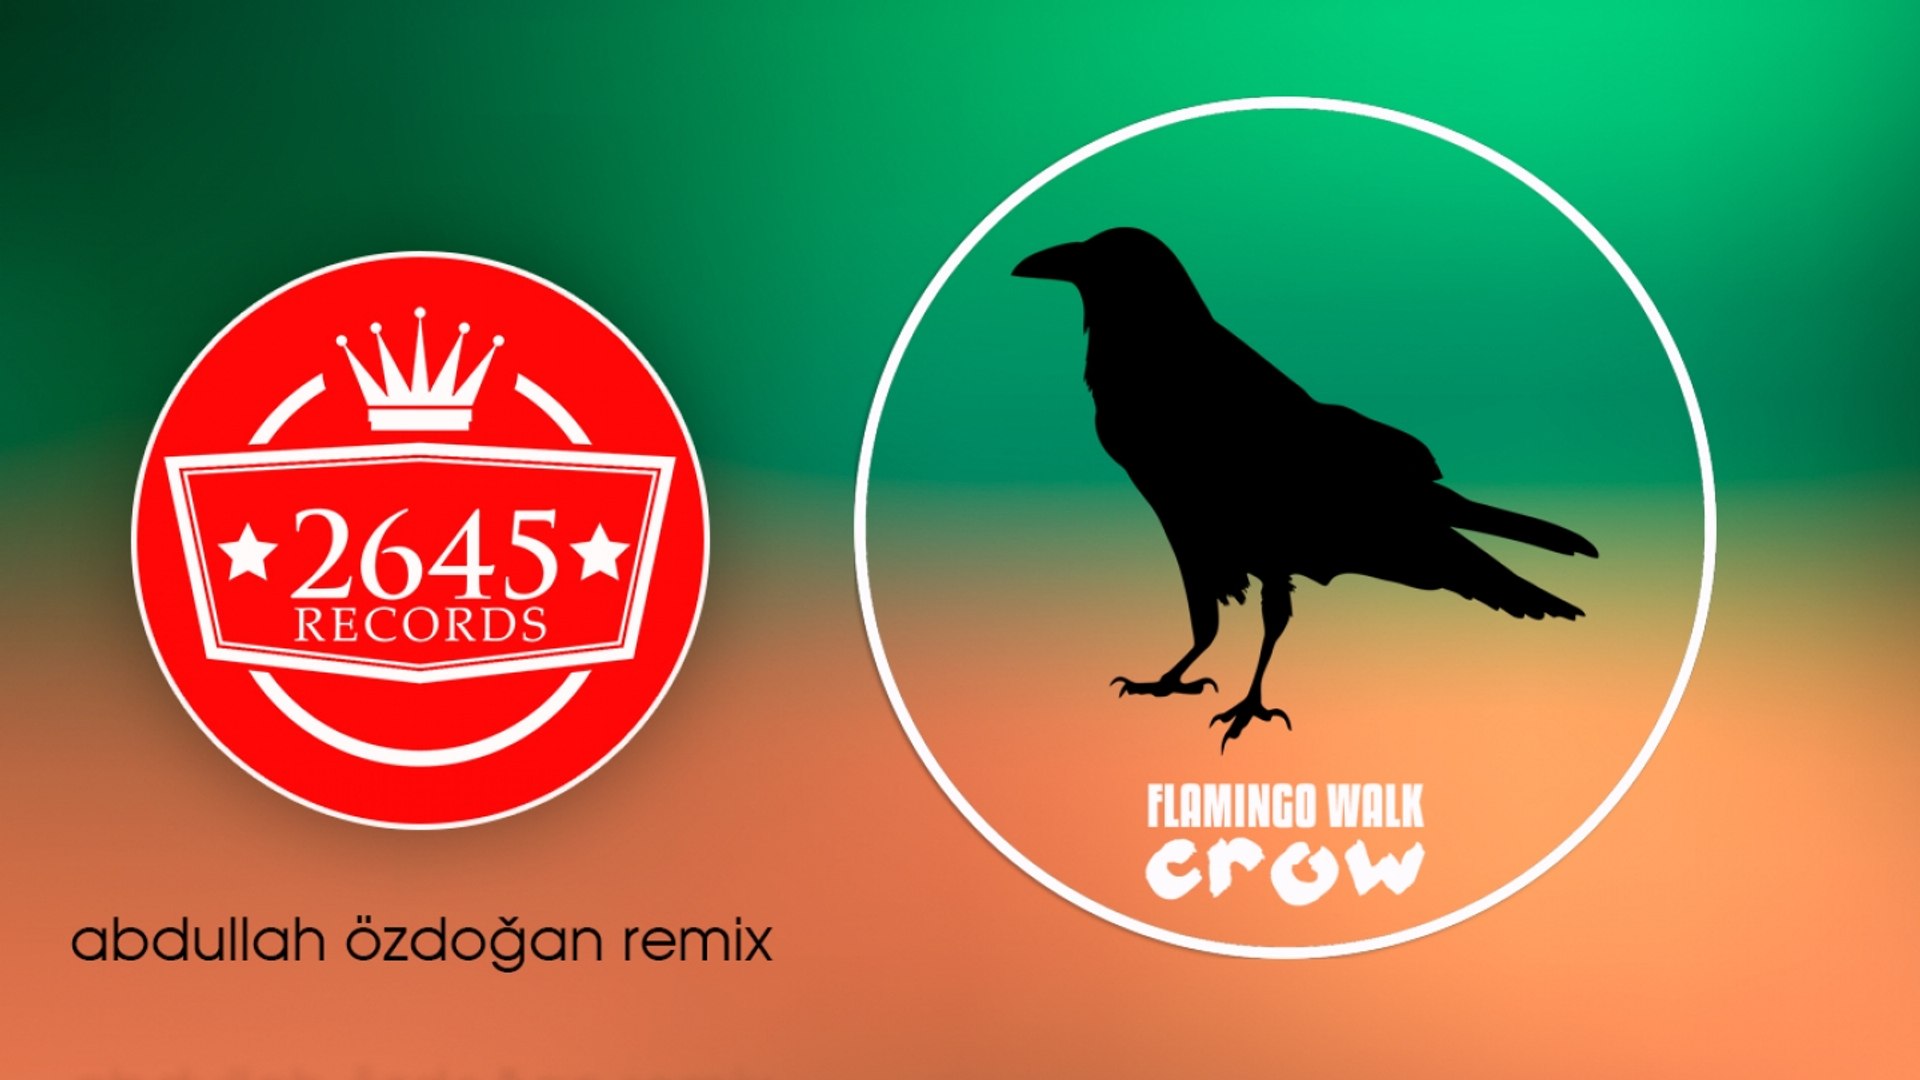 Crow - Flamingo Walk (Abdullah Özdoğan Remix)